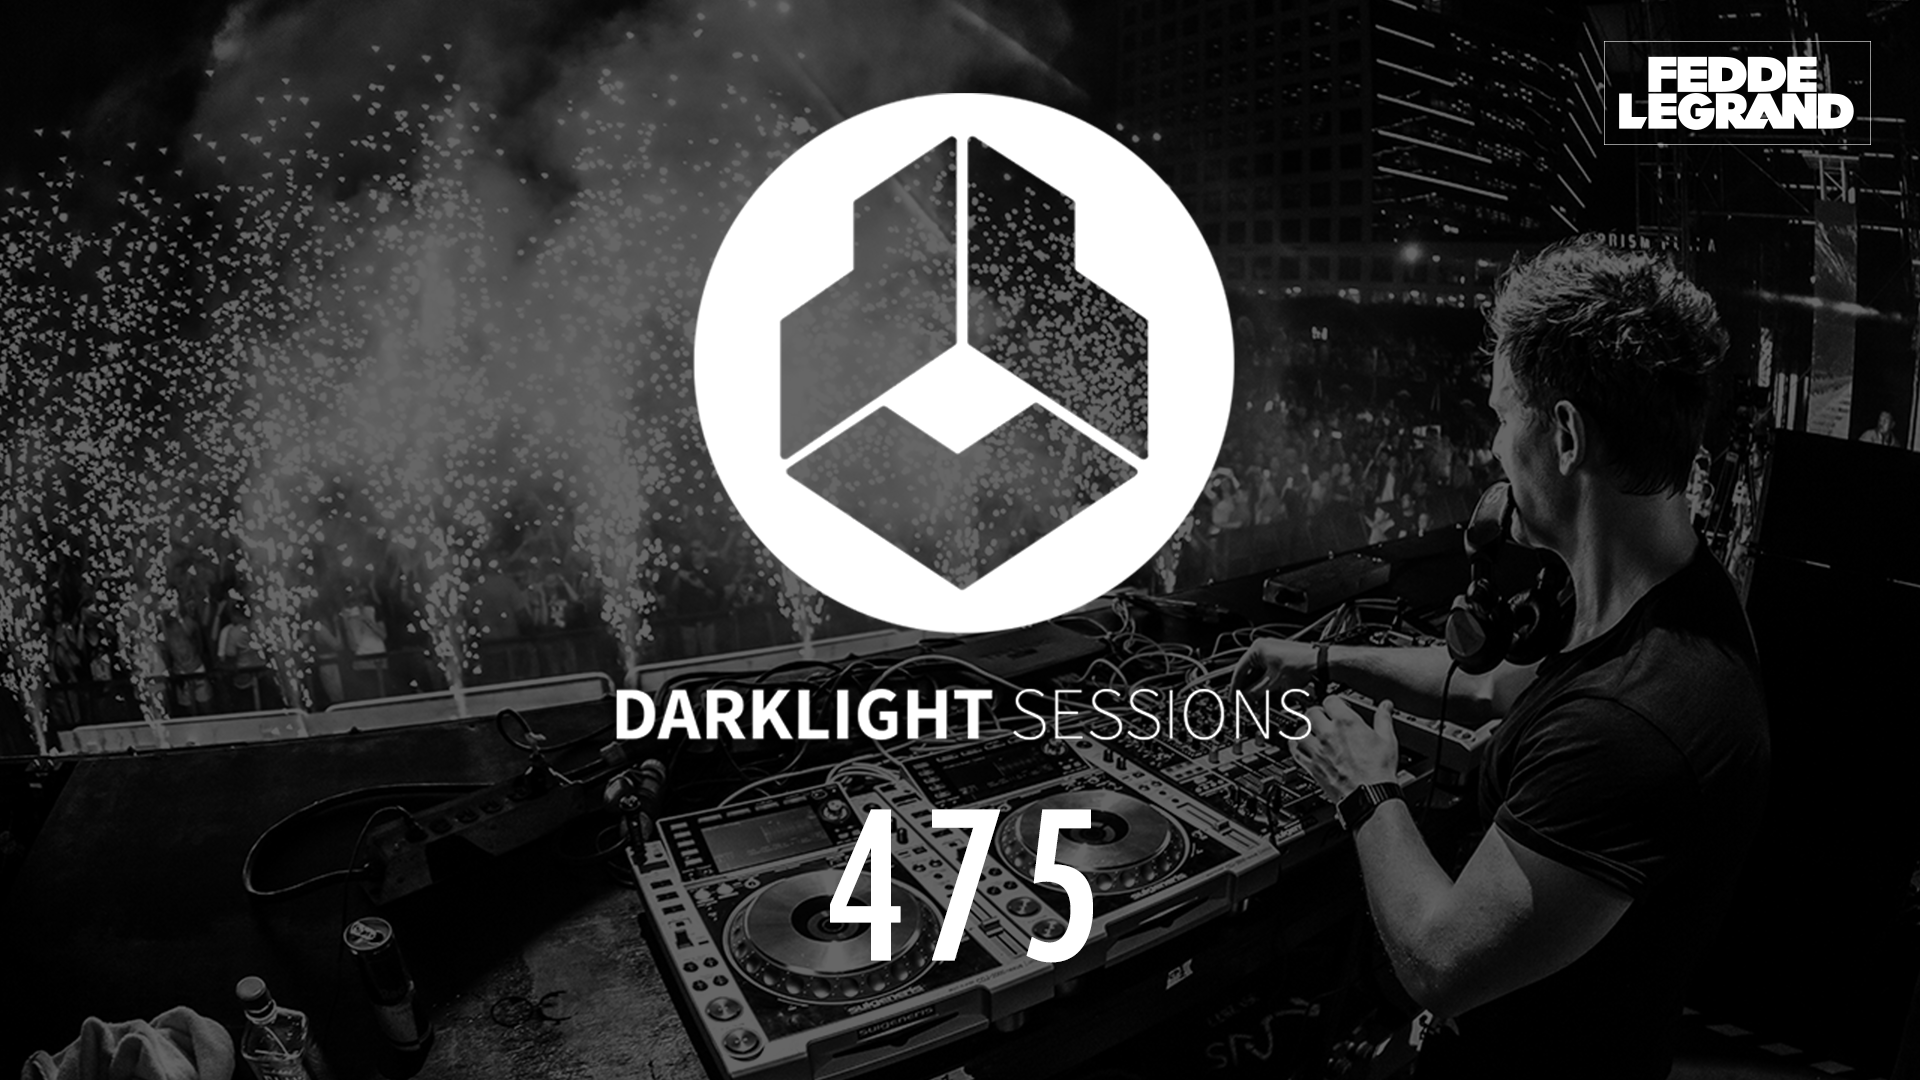 Darklight Sessions 475